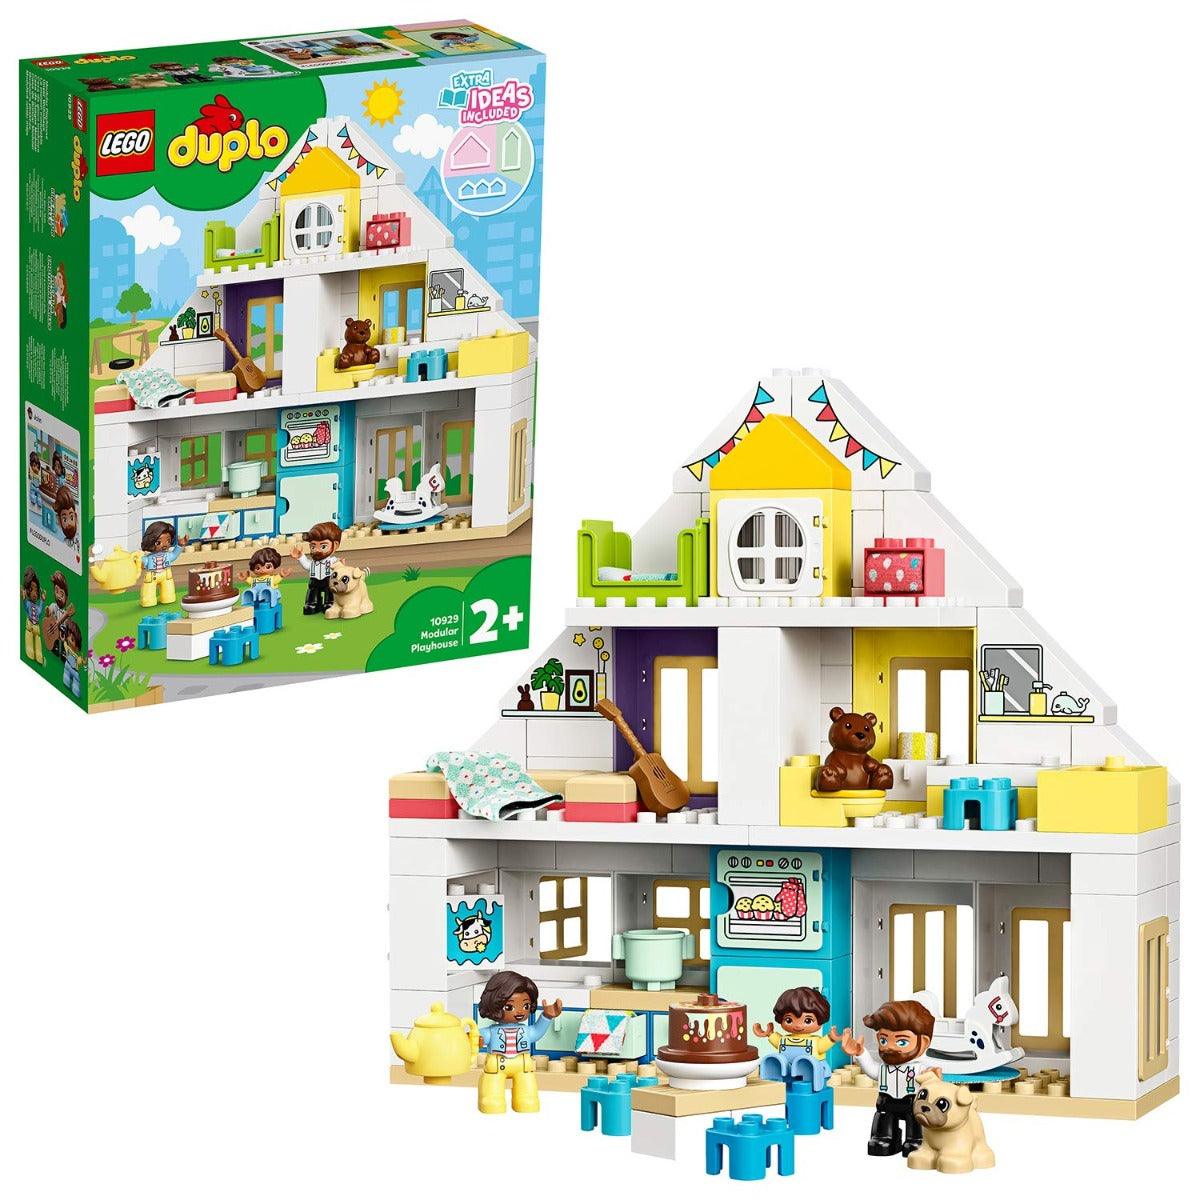 LEGO Duplo Modular Playhouse